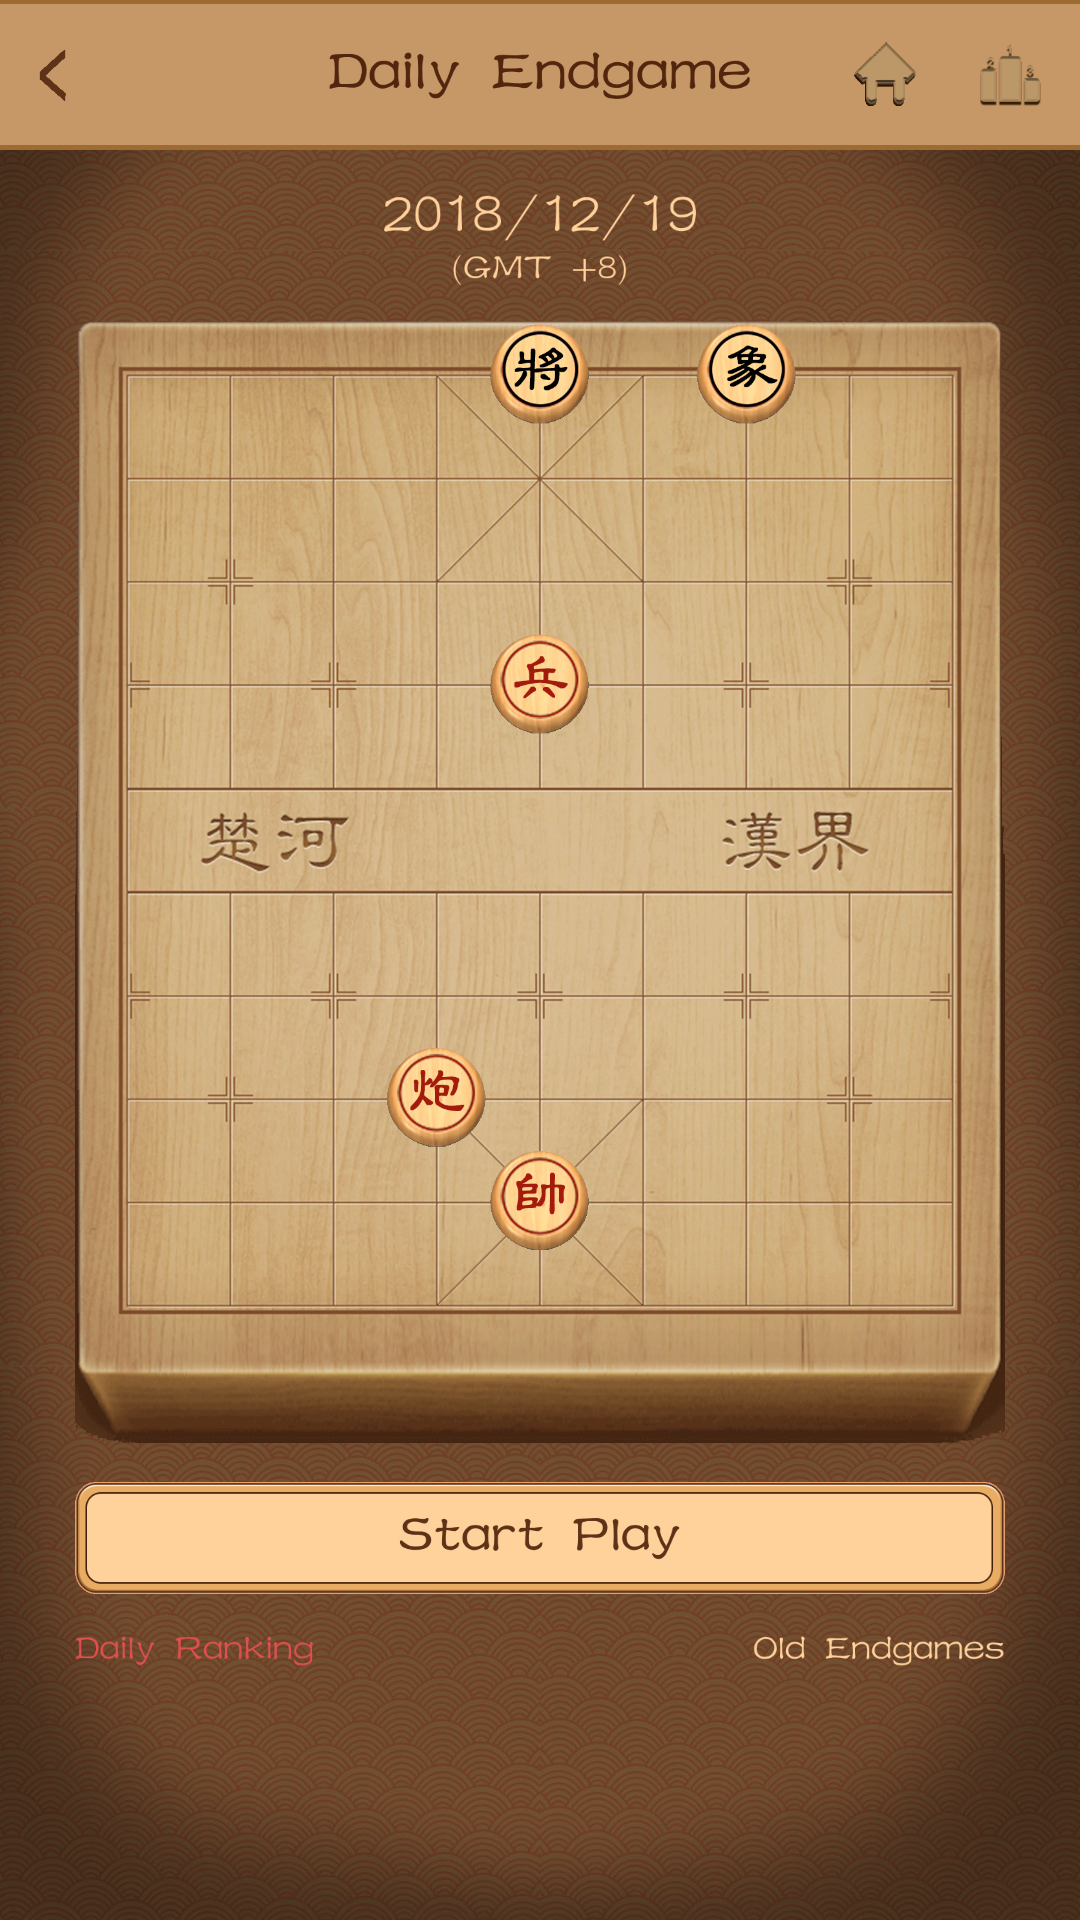 Chinese Chess - Endgame versionのキャプチャ